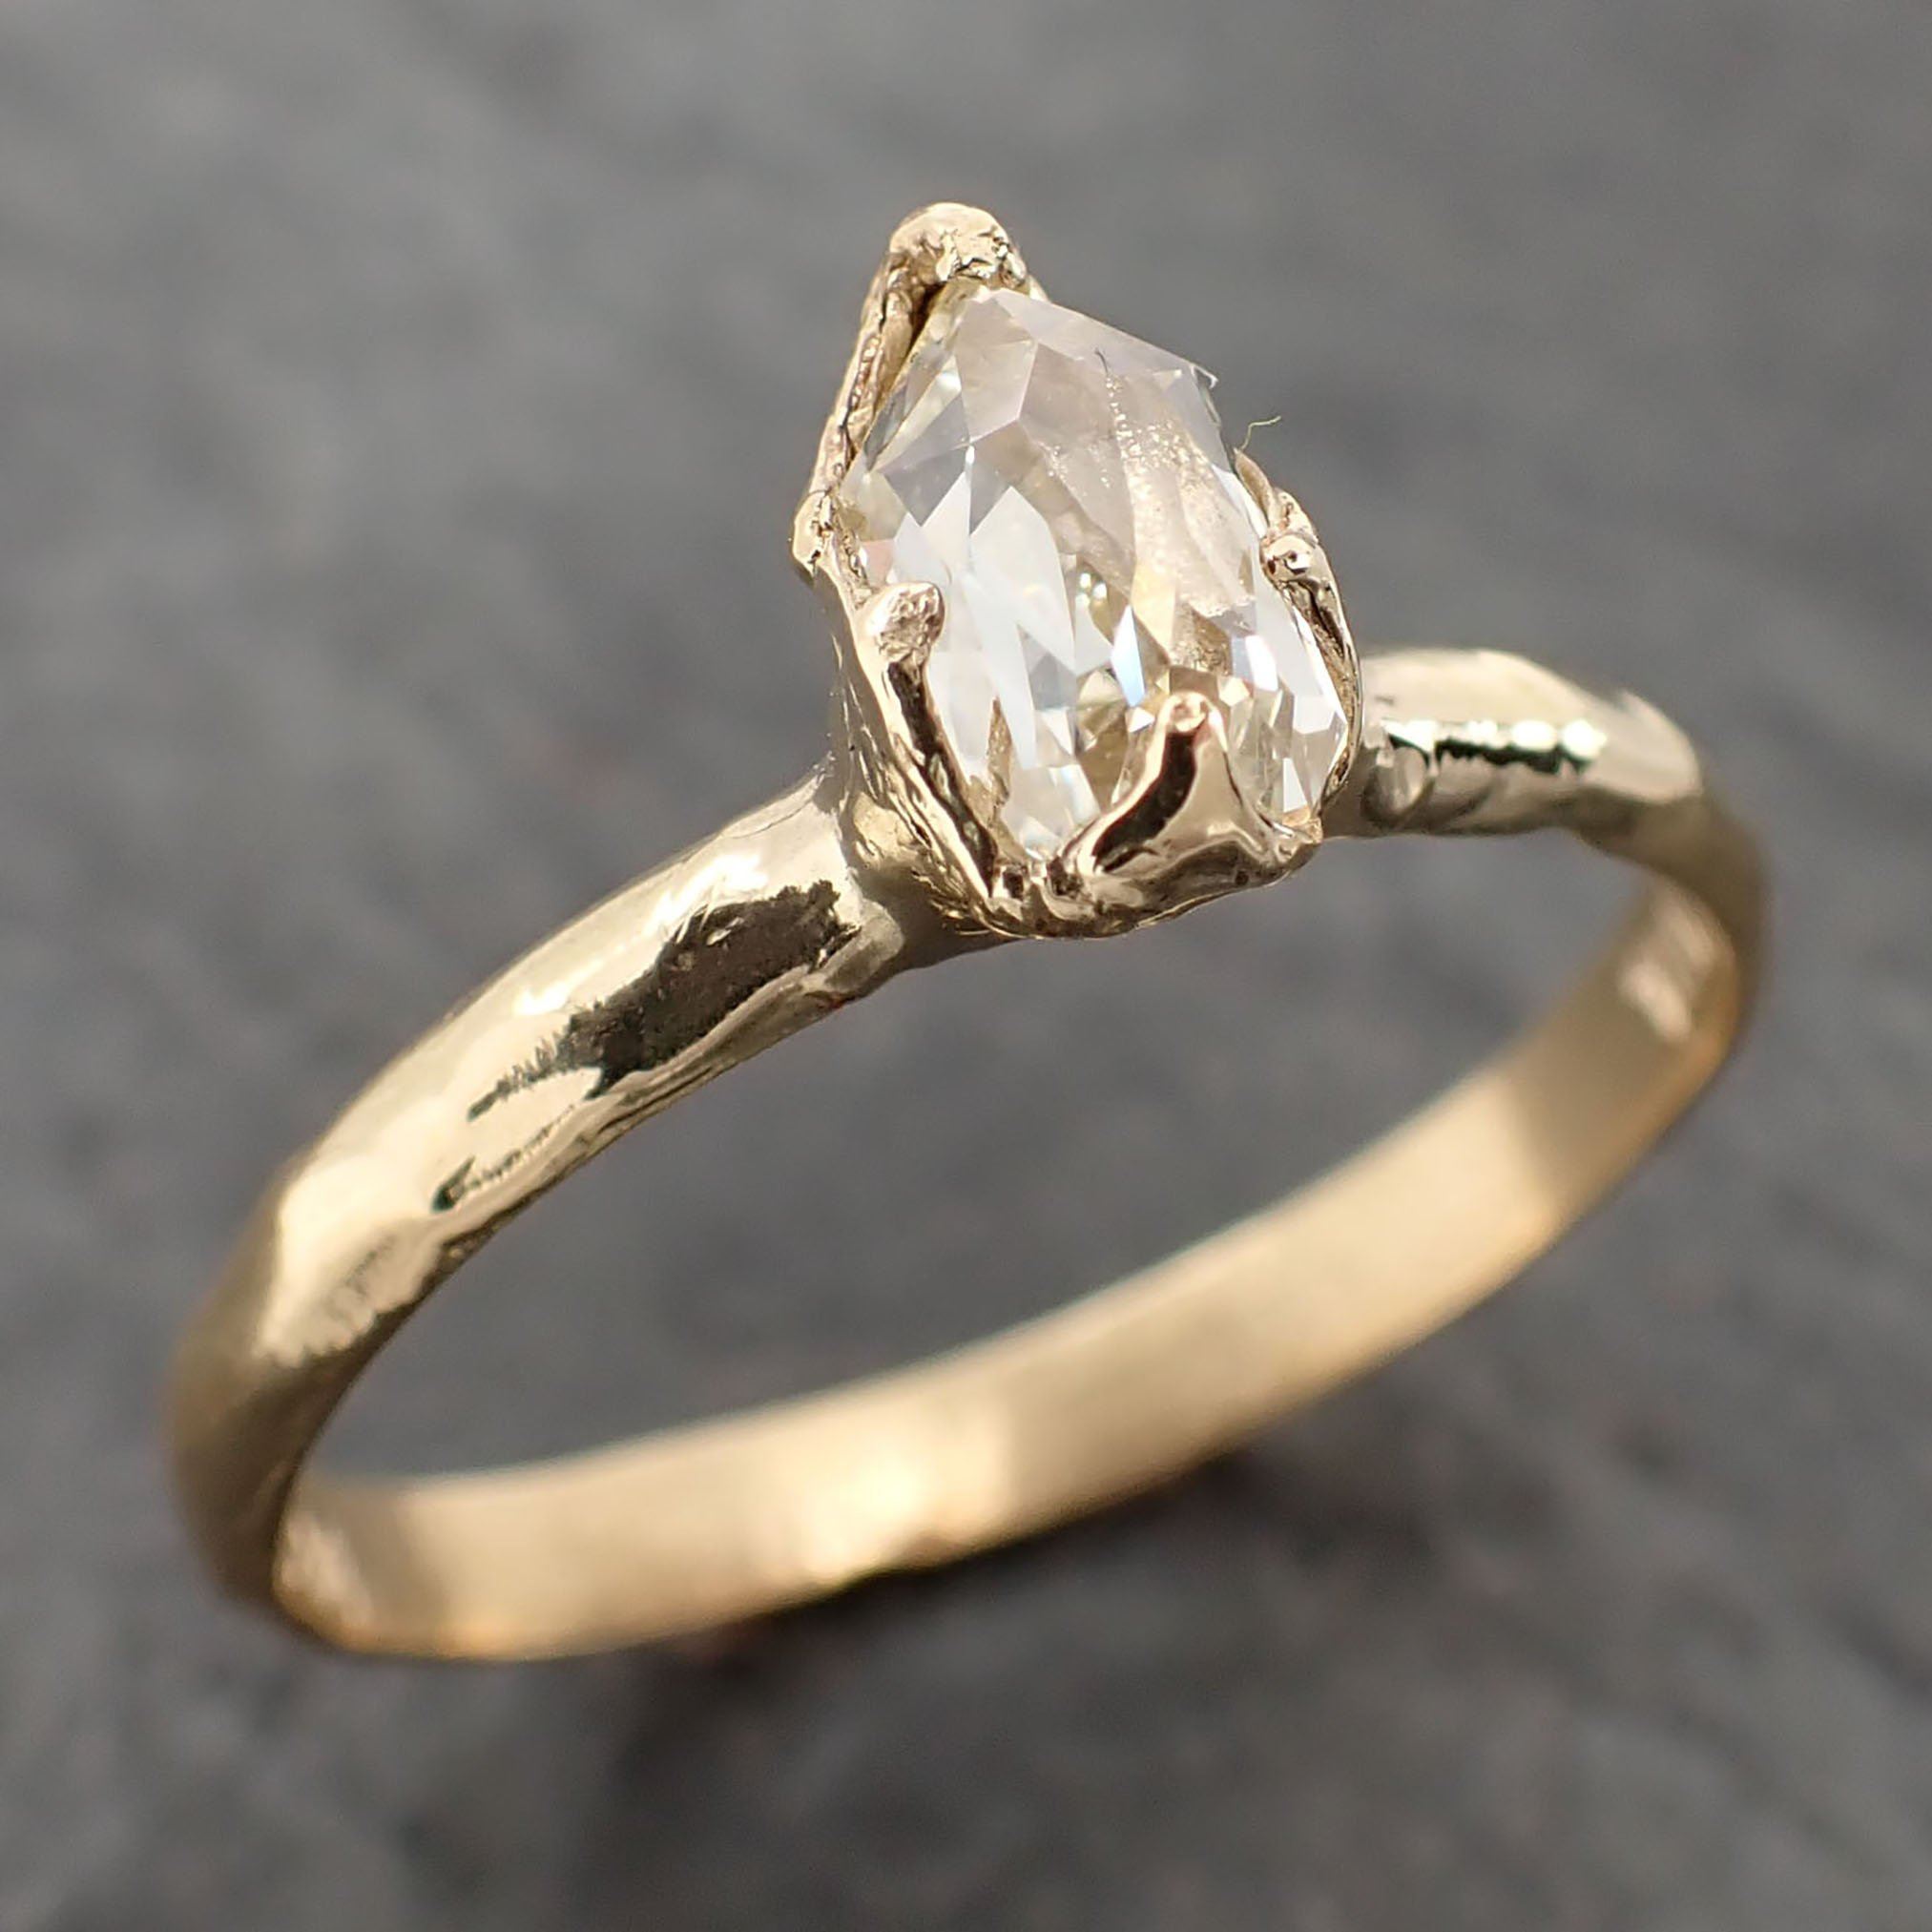 fancy cut white diamond solitaire engagement 18k yellow gold wedding ring diamond ring byangeline 2165 Alternative Engagement